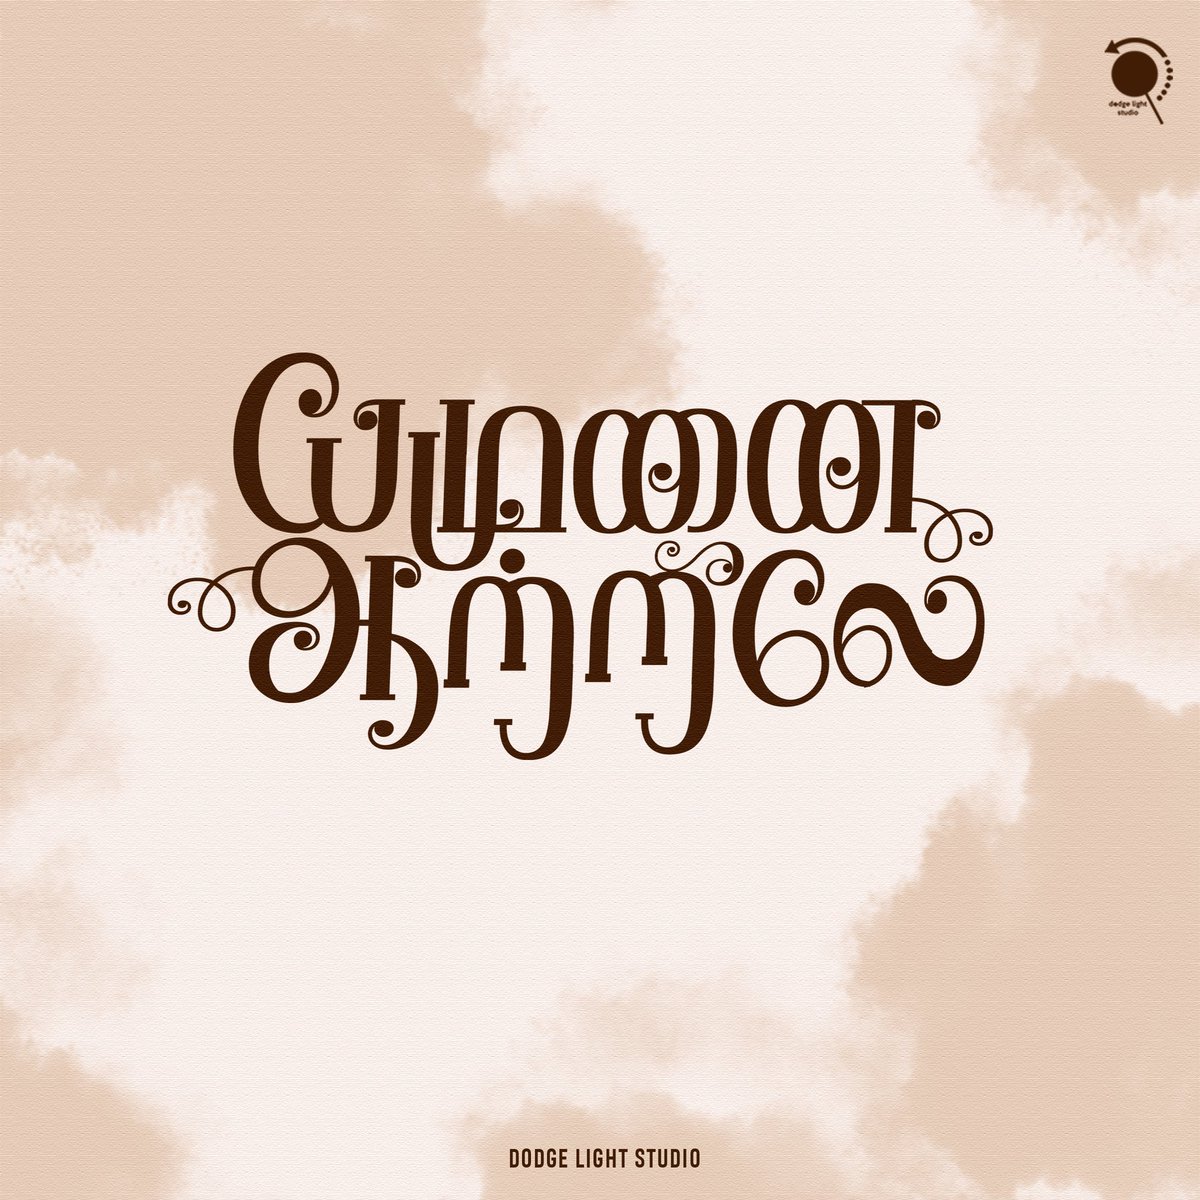 𝙔𝘼𝙈𝙐𝙉𝘼𝙄 𝘼𝘼𝙏𝙍𝙄𝙇𝙀 💛

#yamunaiaatrile #tamiltypographyfont #tamiltypographyworkshop2018 #tamiltypo #titledesign #titledesigner #logodesigner